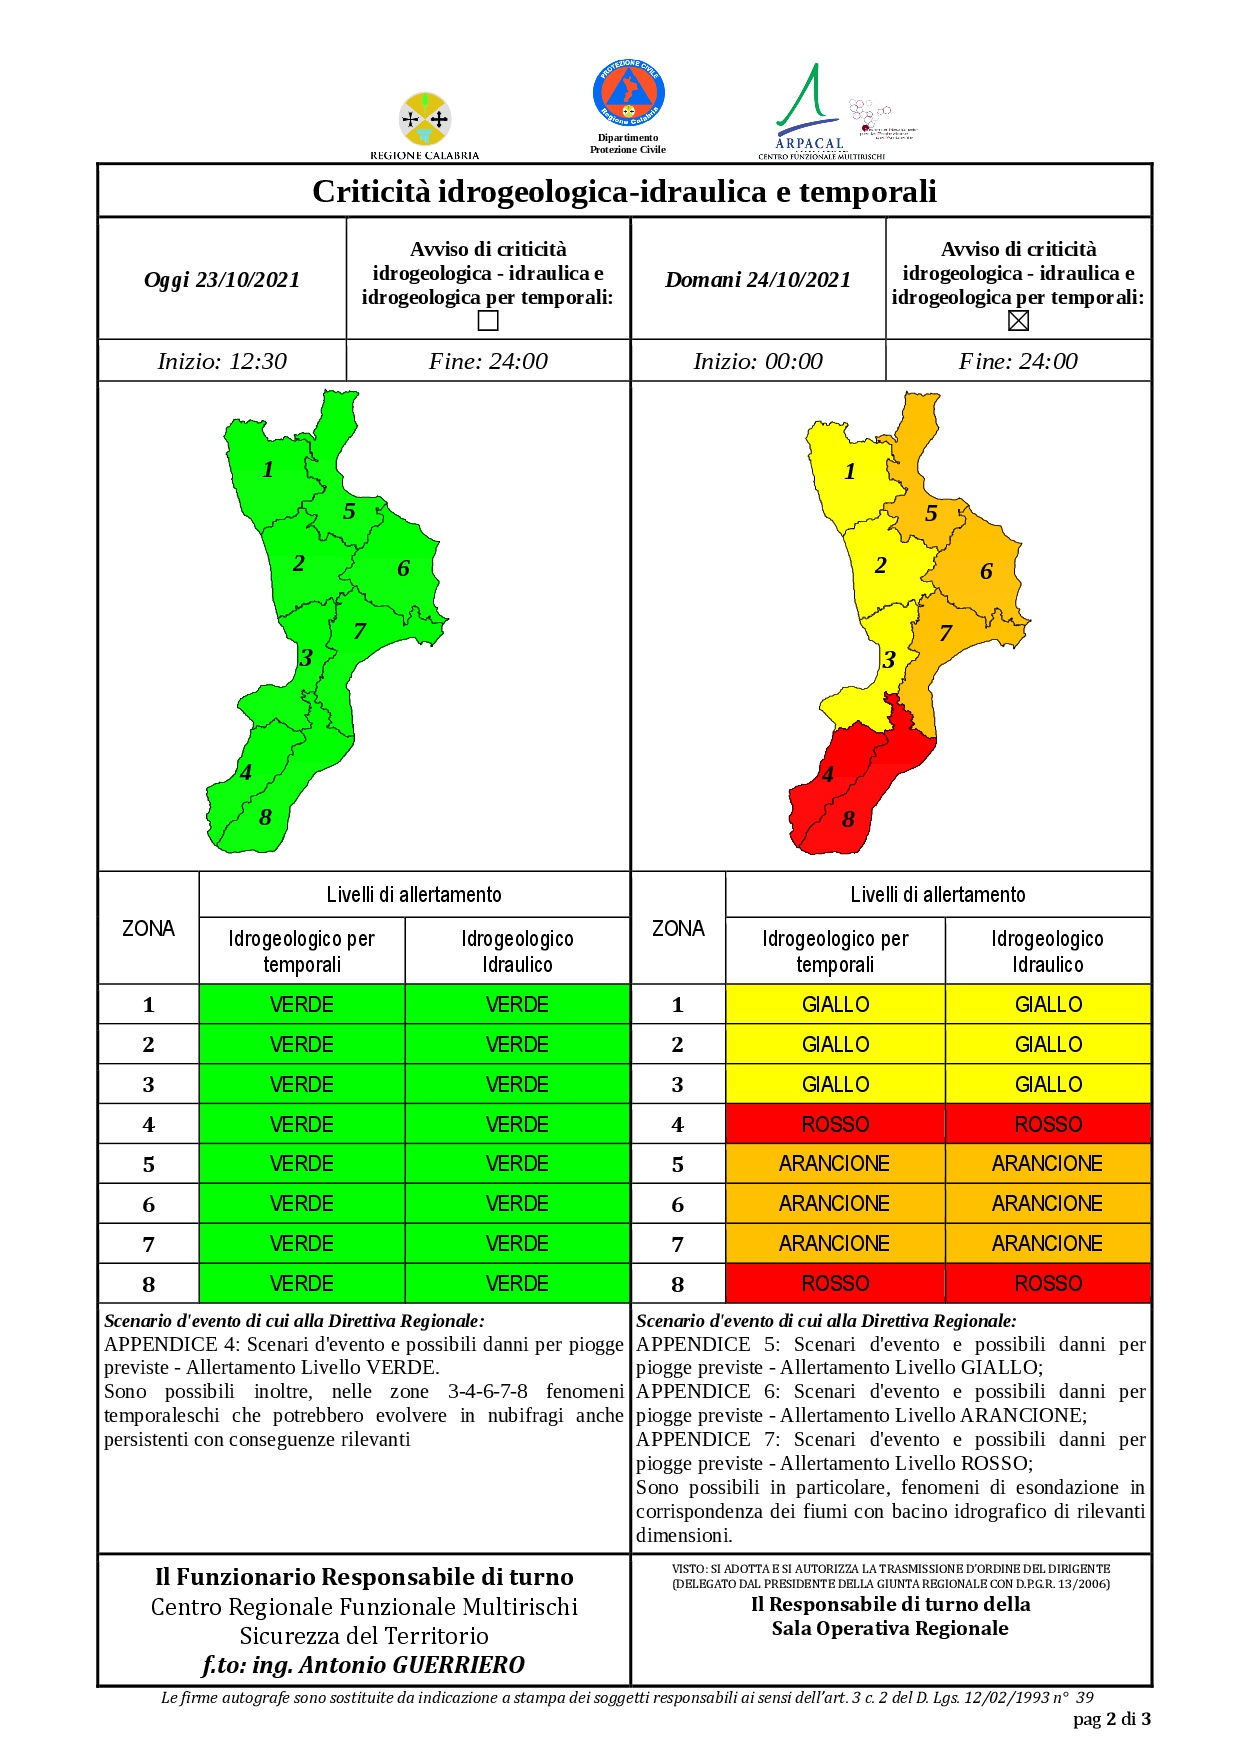 Criticità idrogeologica-idraulica e temporali in Calabria 23-10-2021